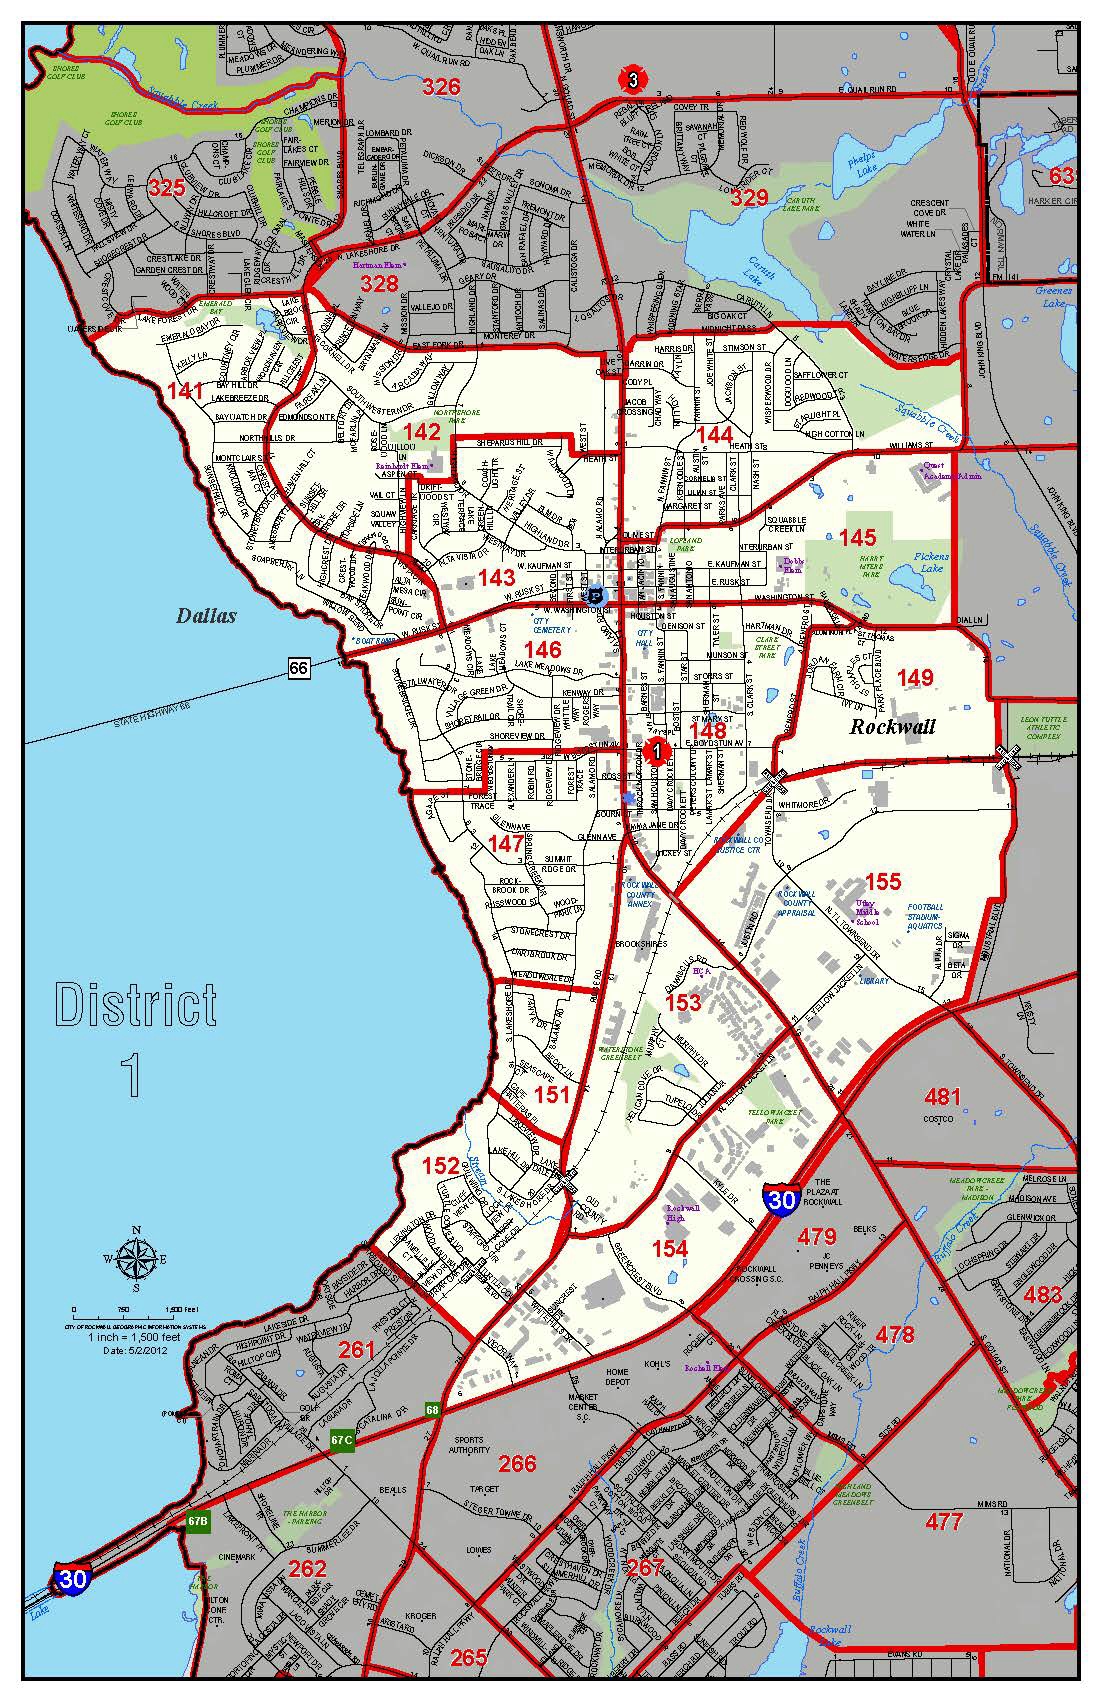 District 1